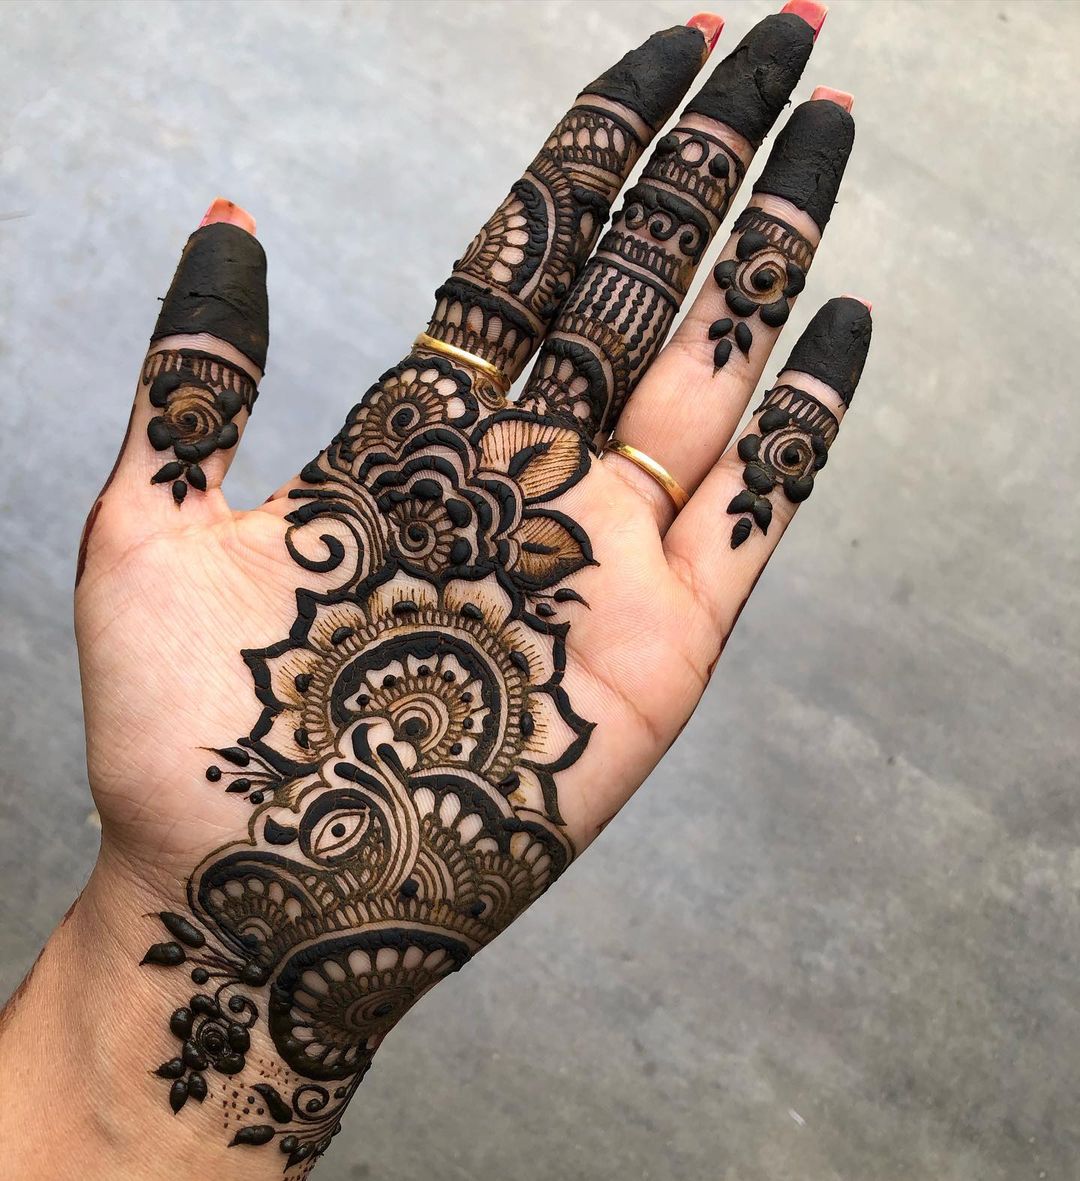 henna#mehendi#mehndi#henna | Latest henna designs, Mehndi designs, Mehndi  designs front hand | Mehndi design images, Front mehndi design, Circle mehndi  designs